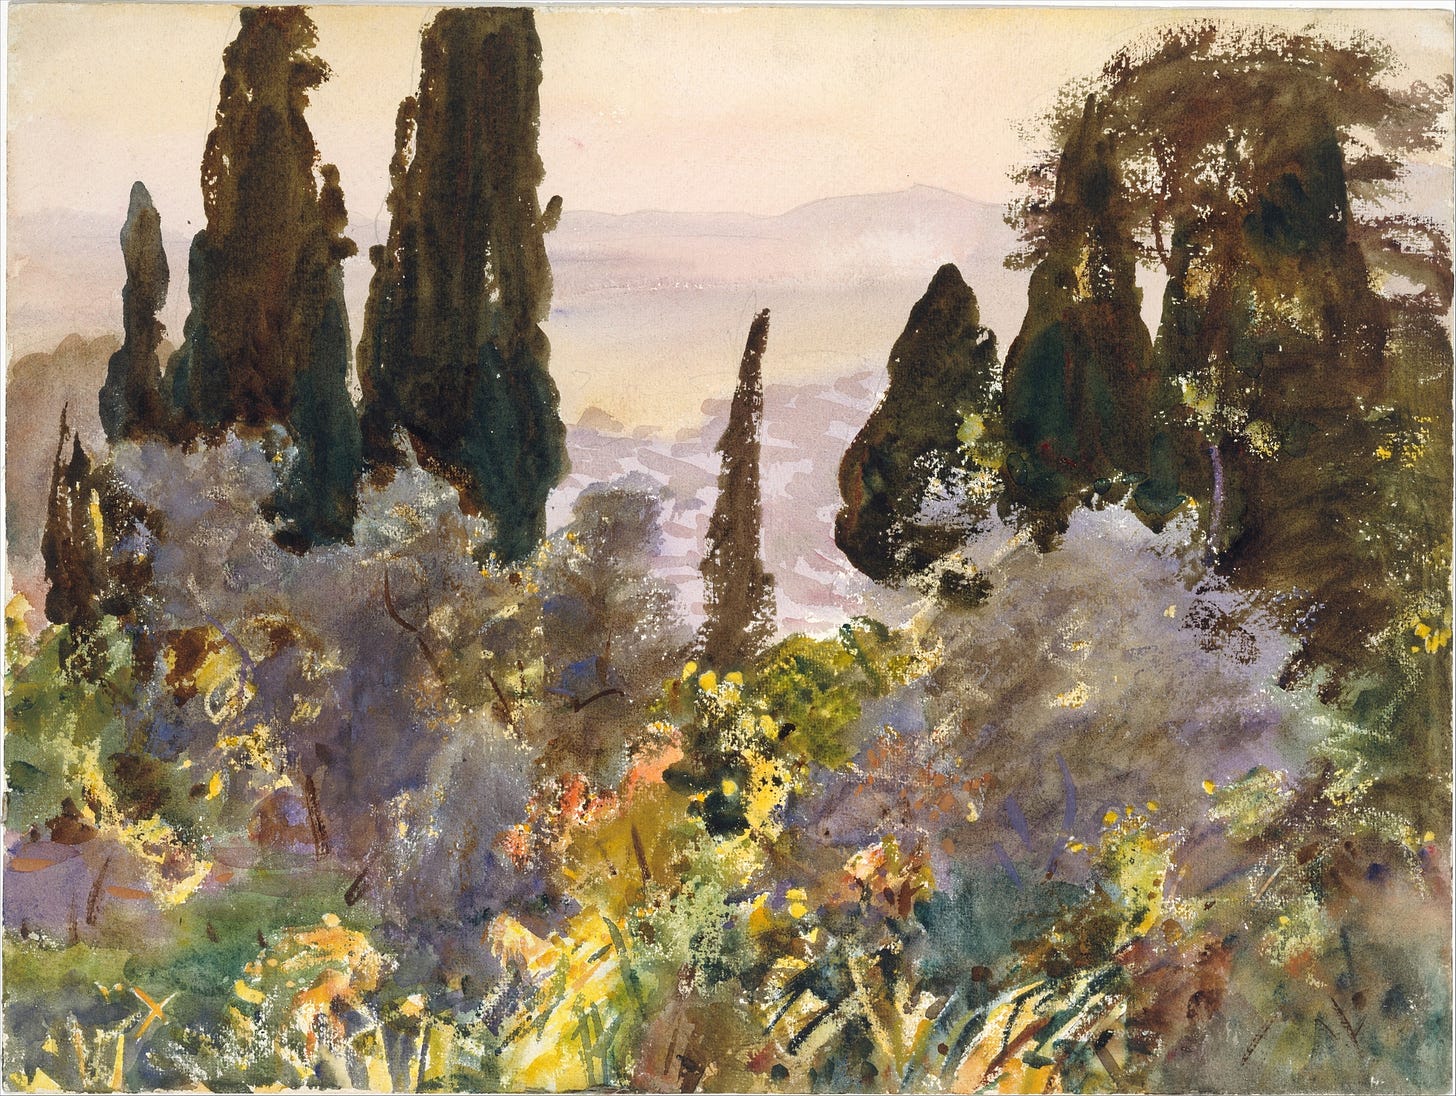 Granada (1912)